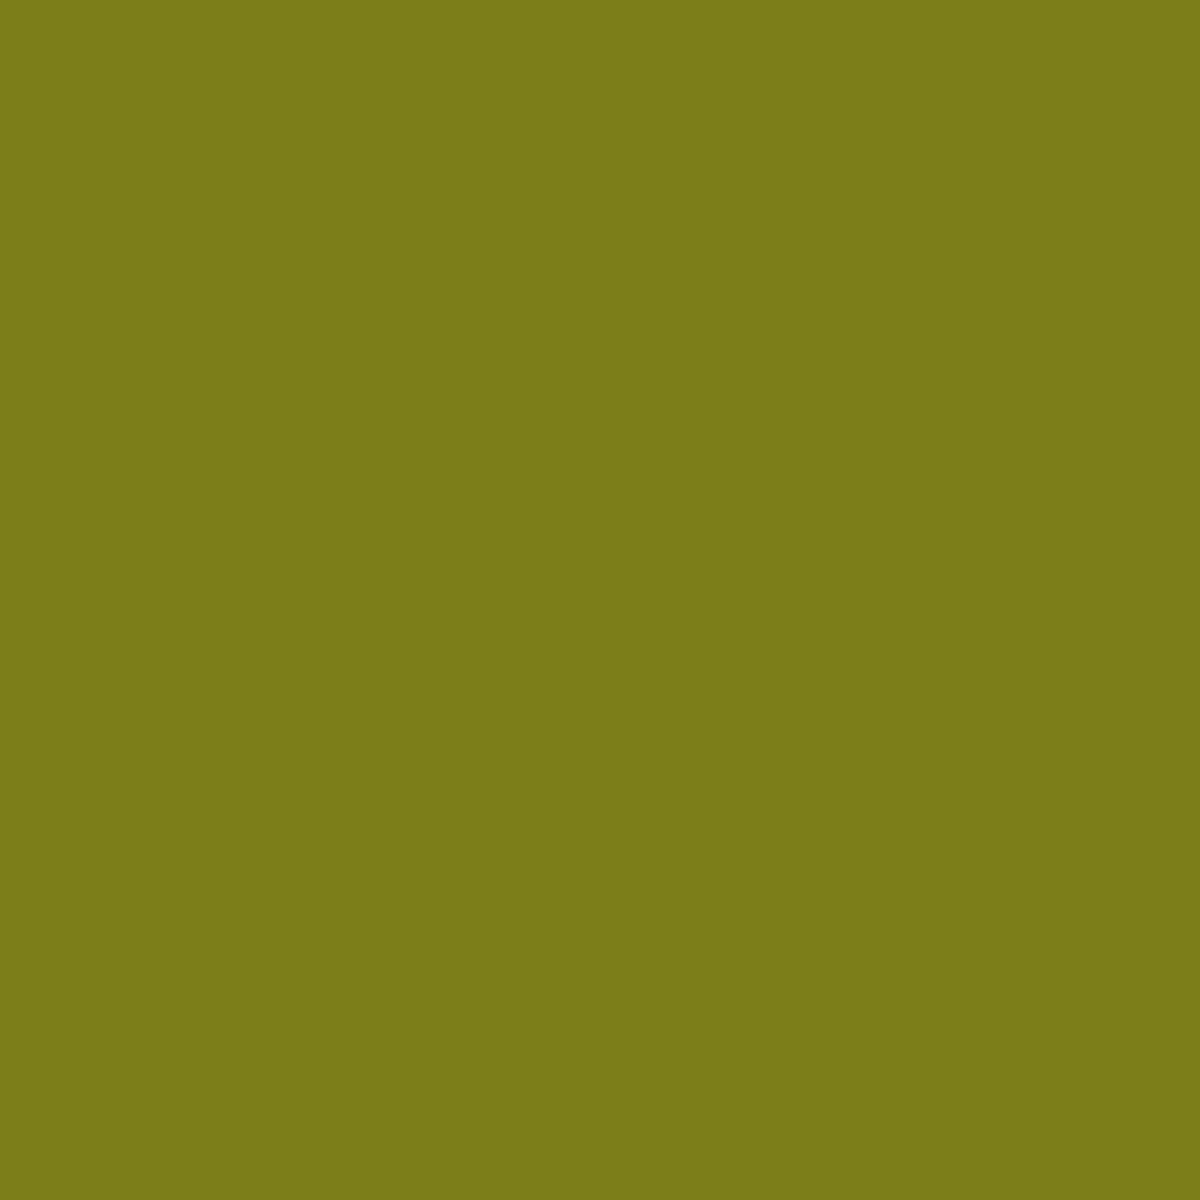 Swatch Sample of Signoria Raffaello Bedding in Moss Green Color